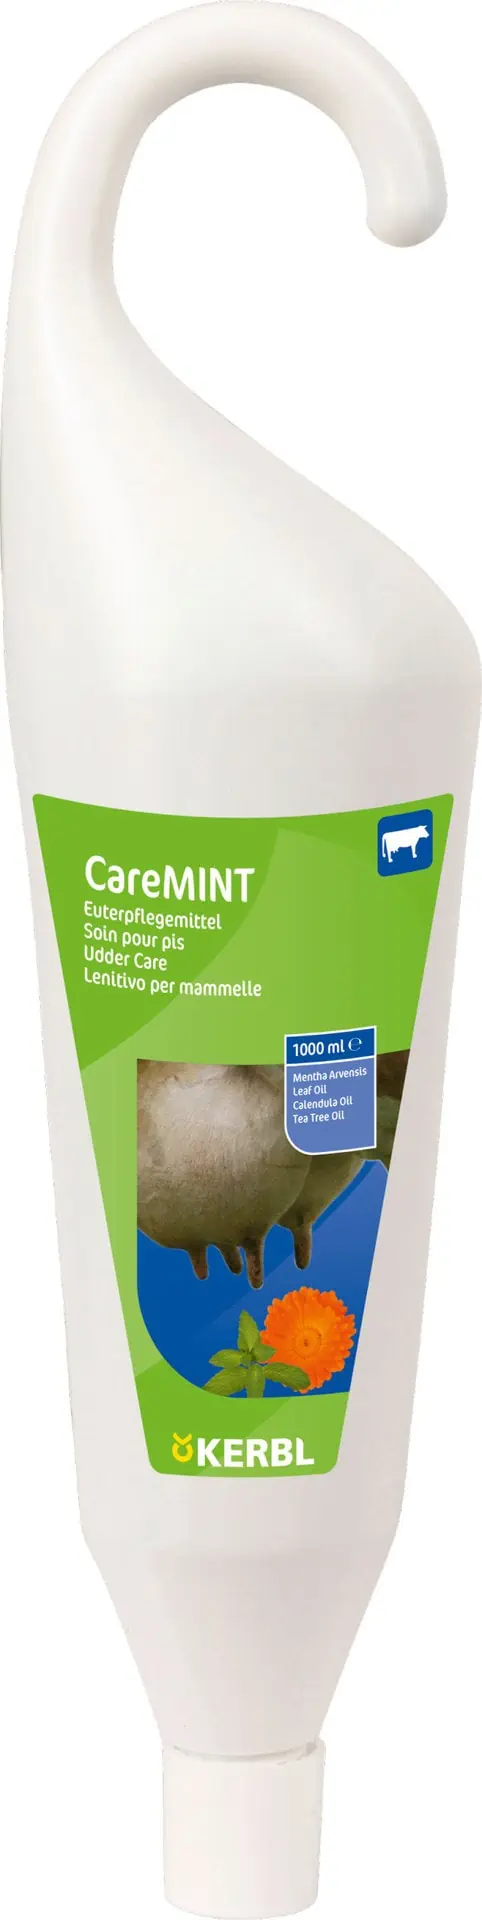 Udder care product CareMint 1000ml